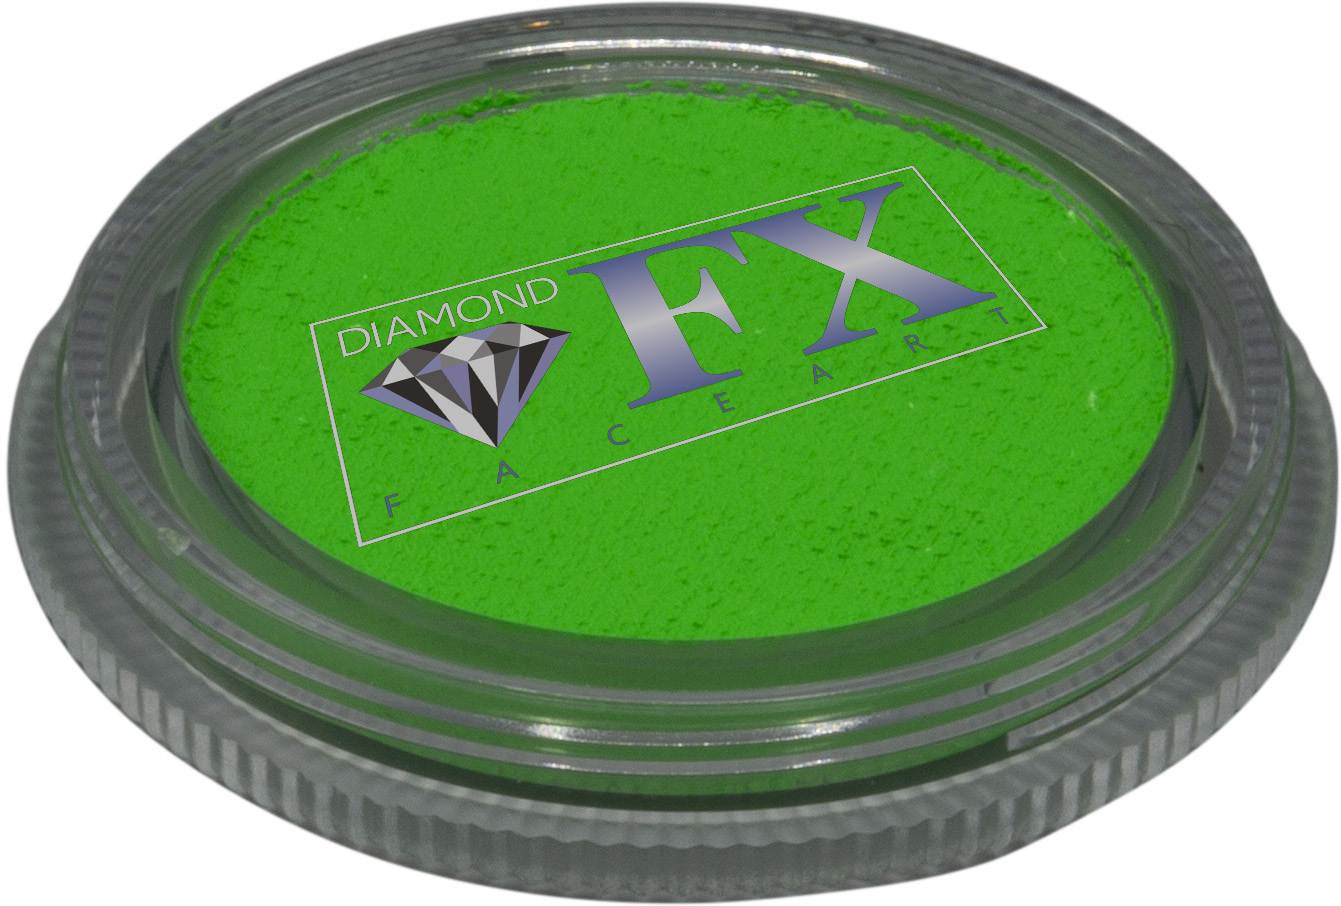 Diamond FX Green Neon 30g - Small Image